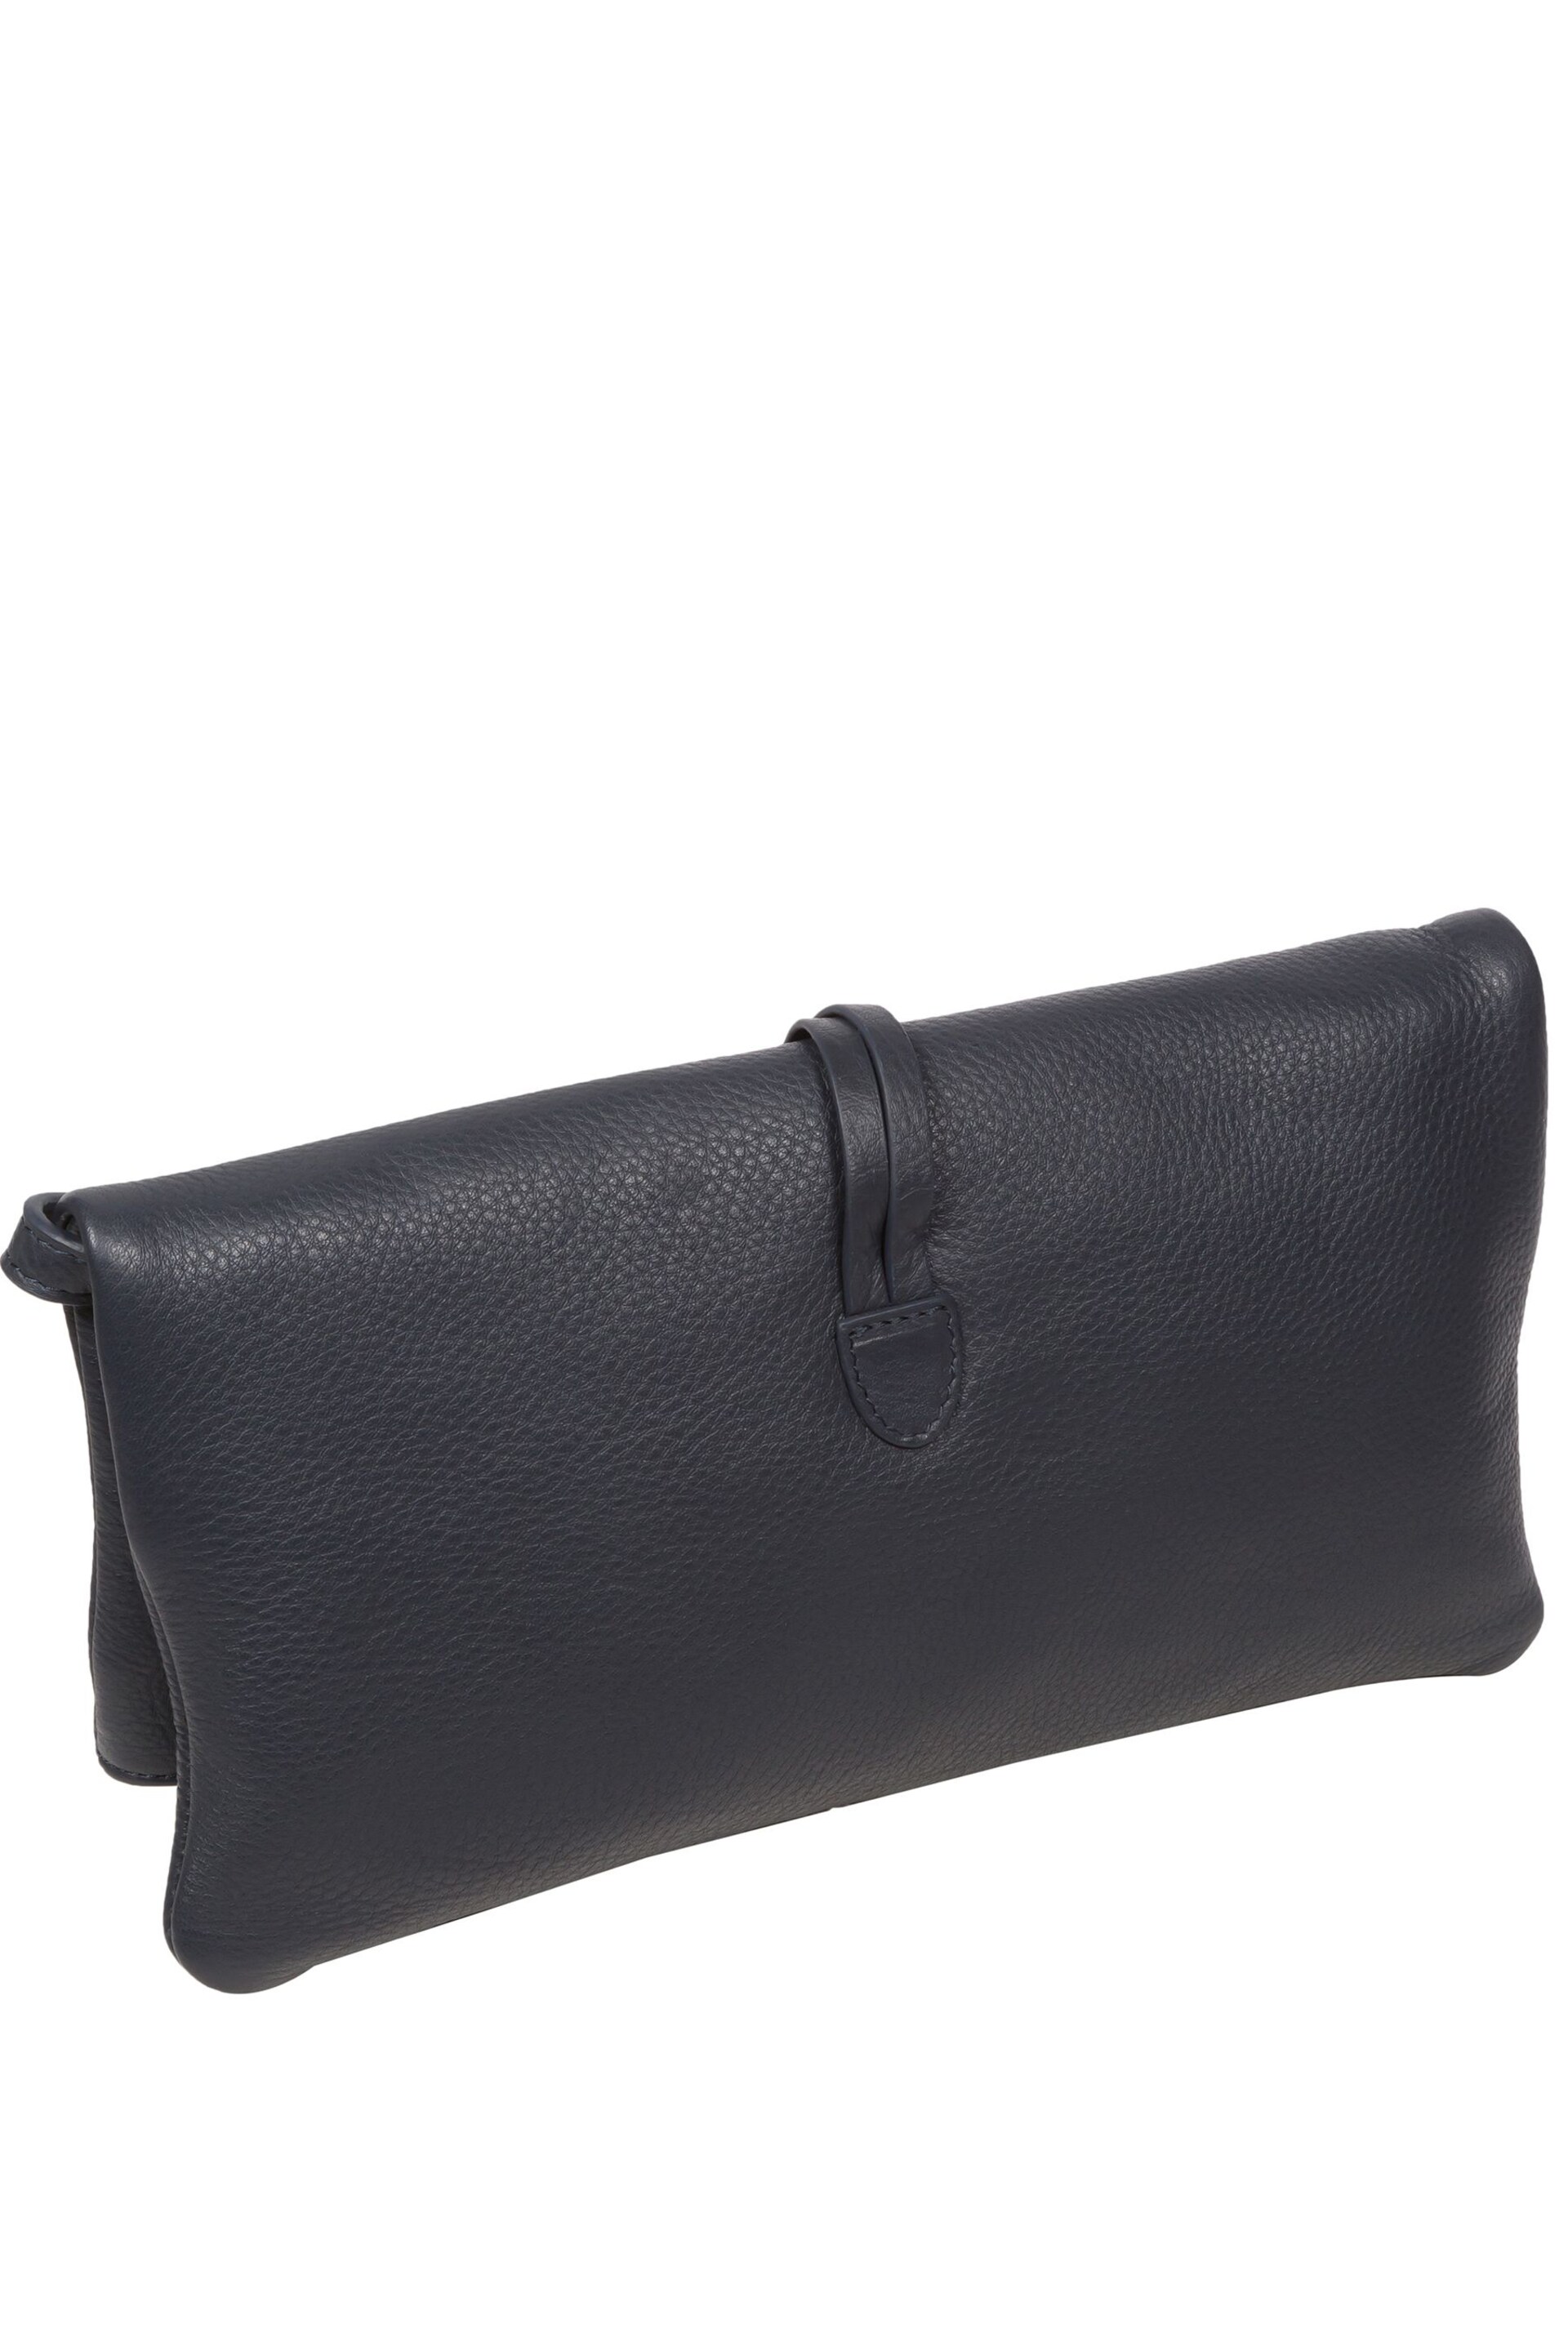 Pure Luxuries London Selene Nappa Leather Cross-Body Clutch Bag - Image 2 of 5